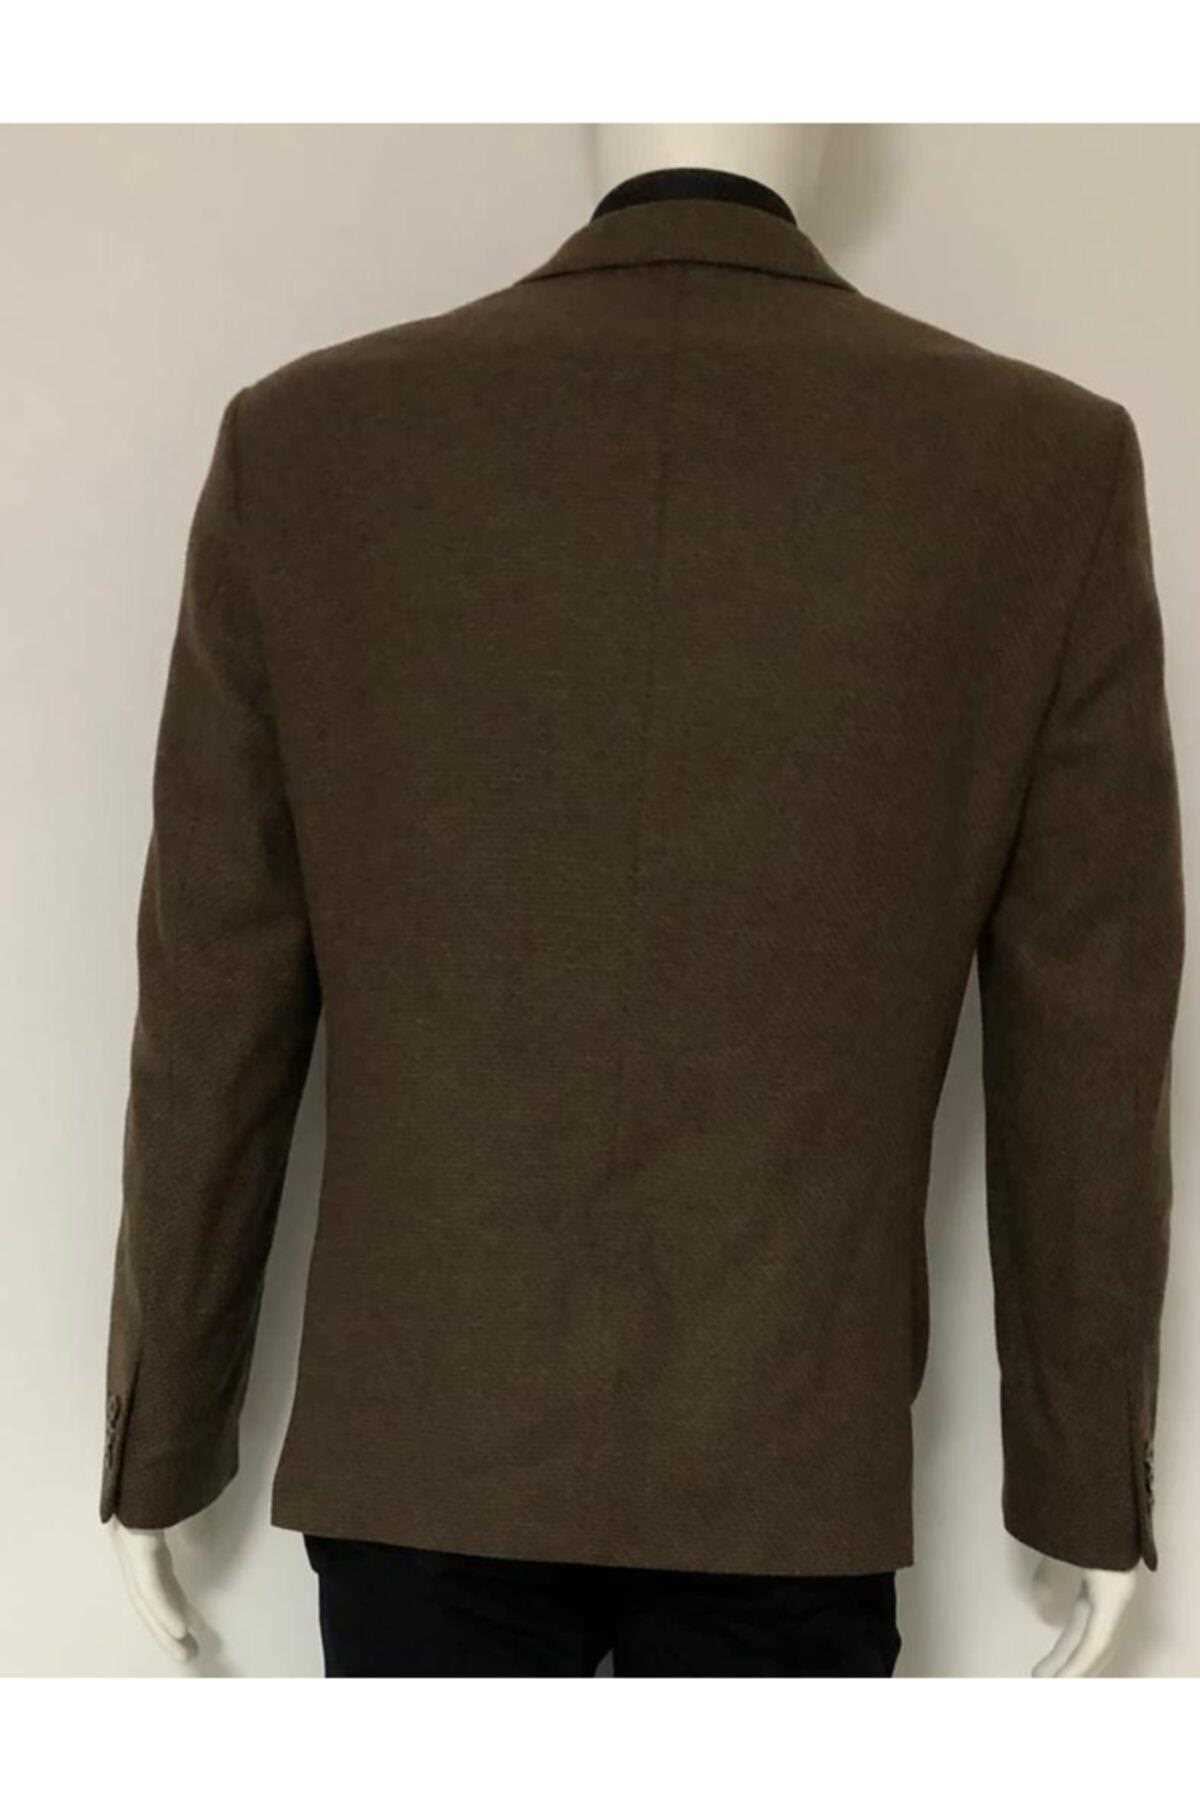 تک کت مردانه شیک U.S. Polo Assn. رنگ قهوه ای کد ty65871933